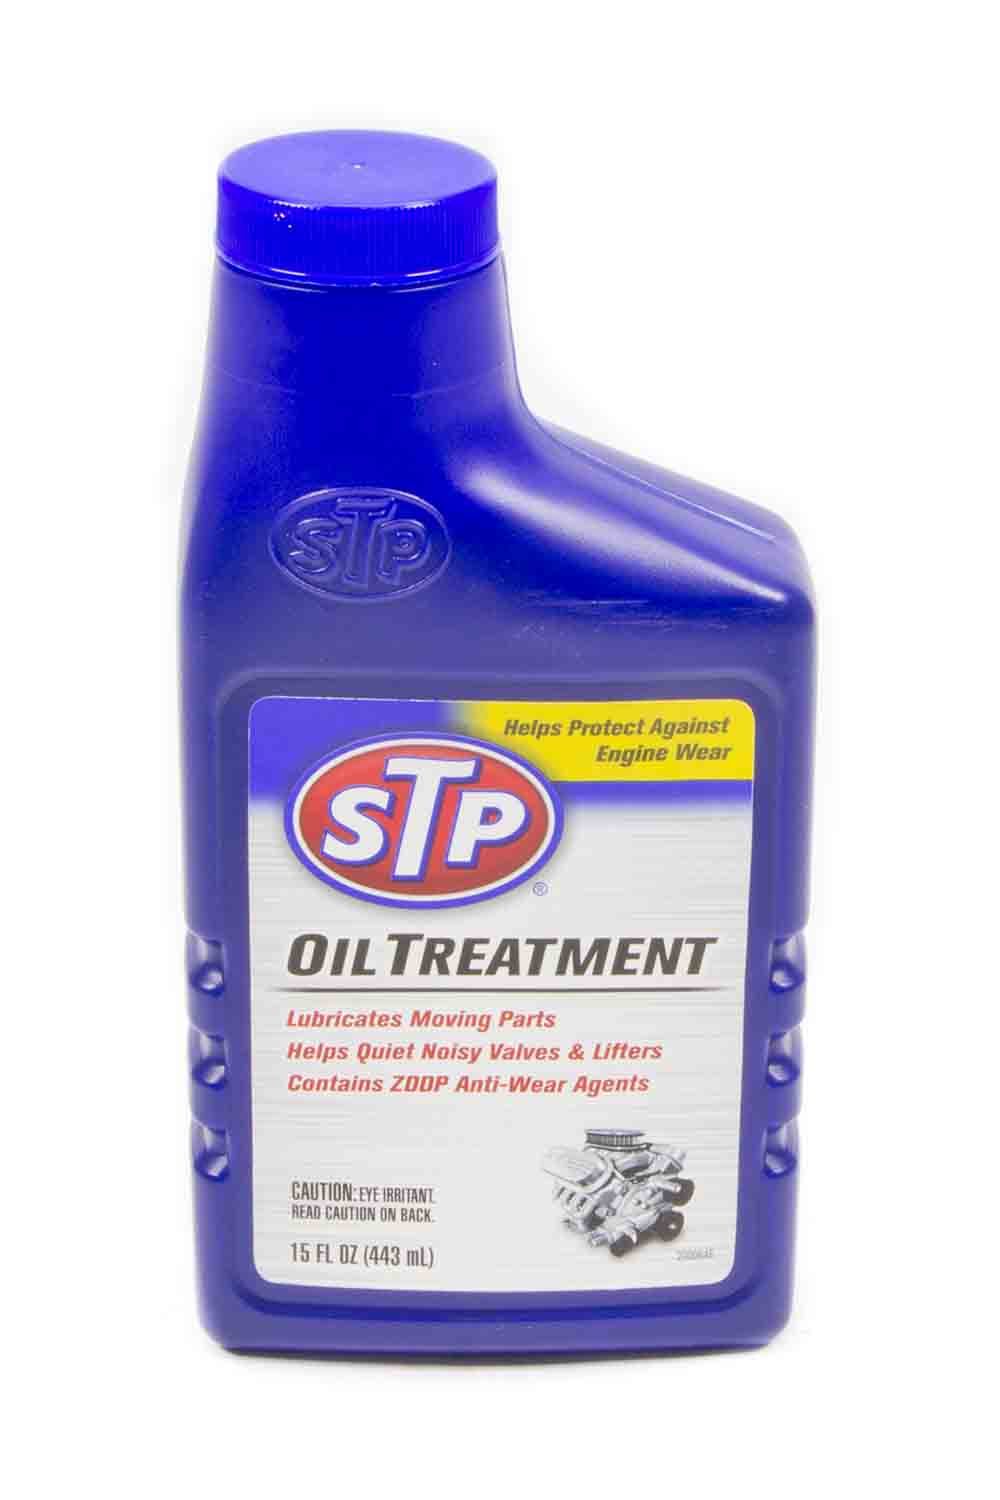 STP Oil Treatment 15 oz. - ST-1014